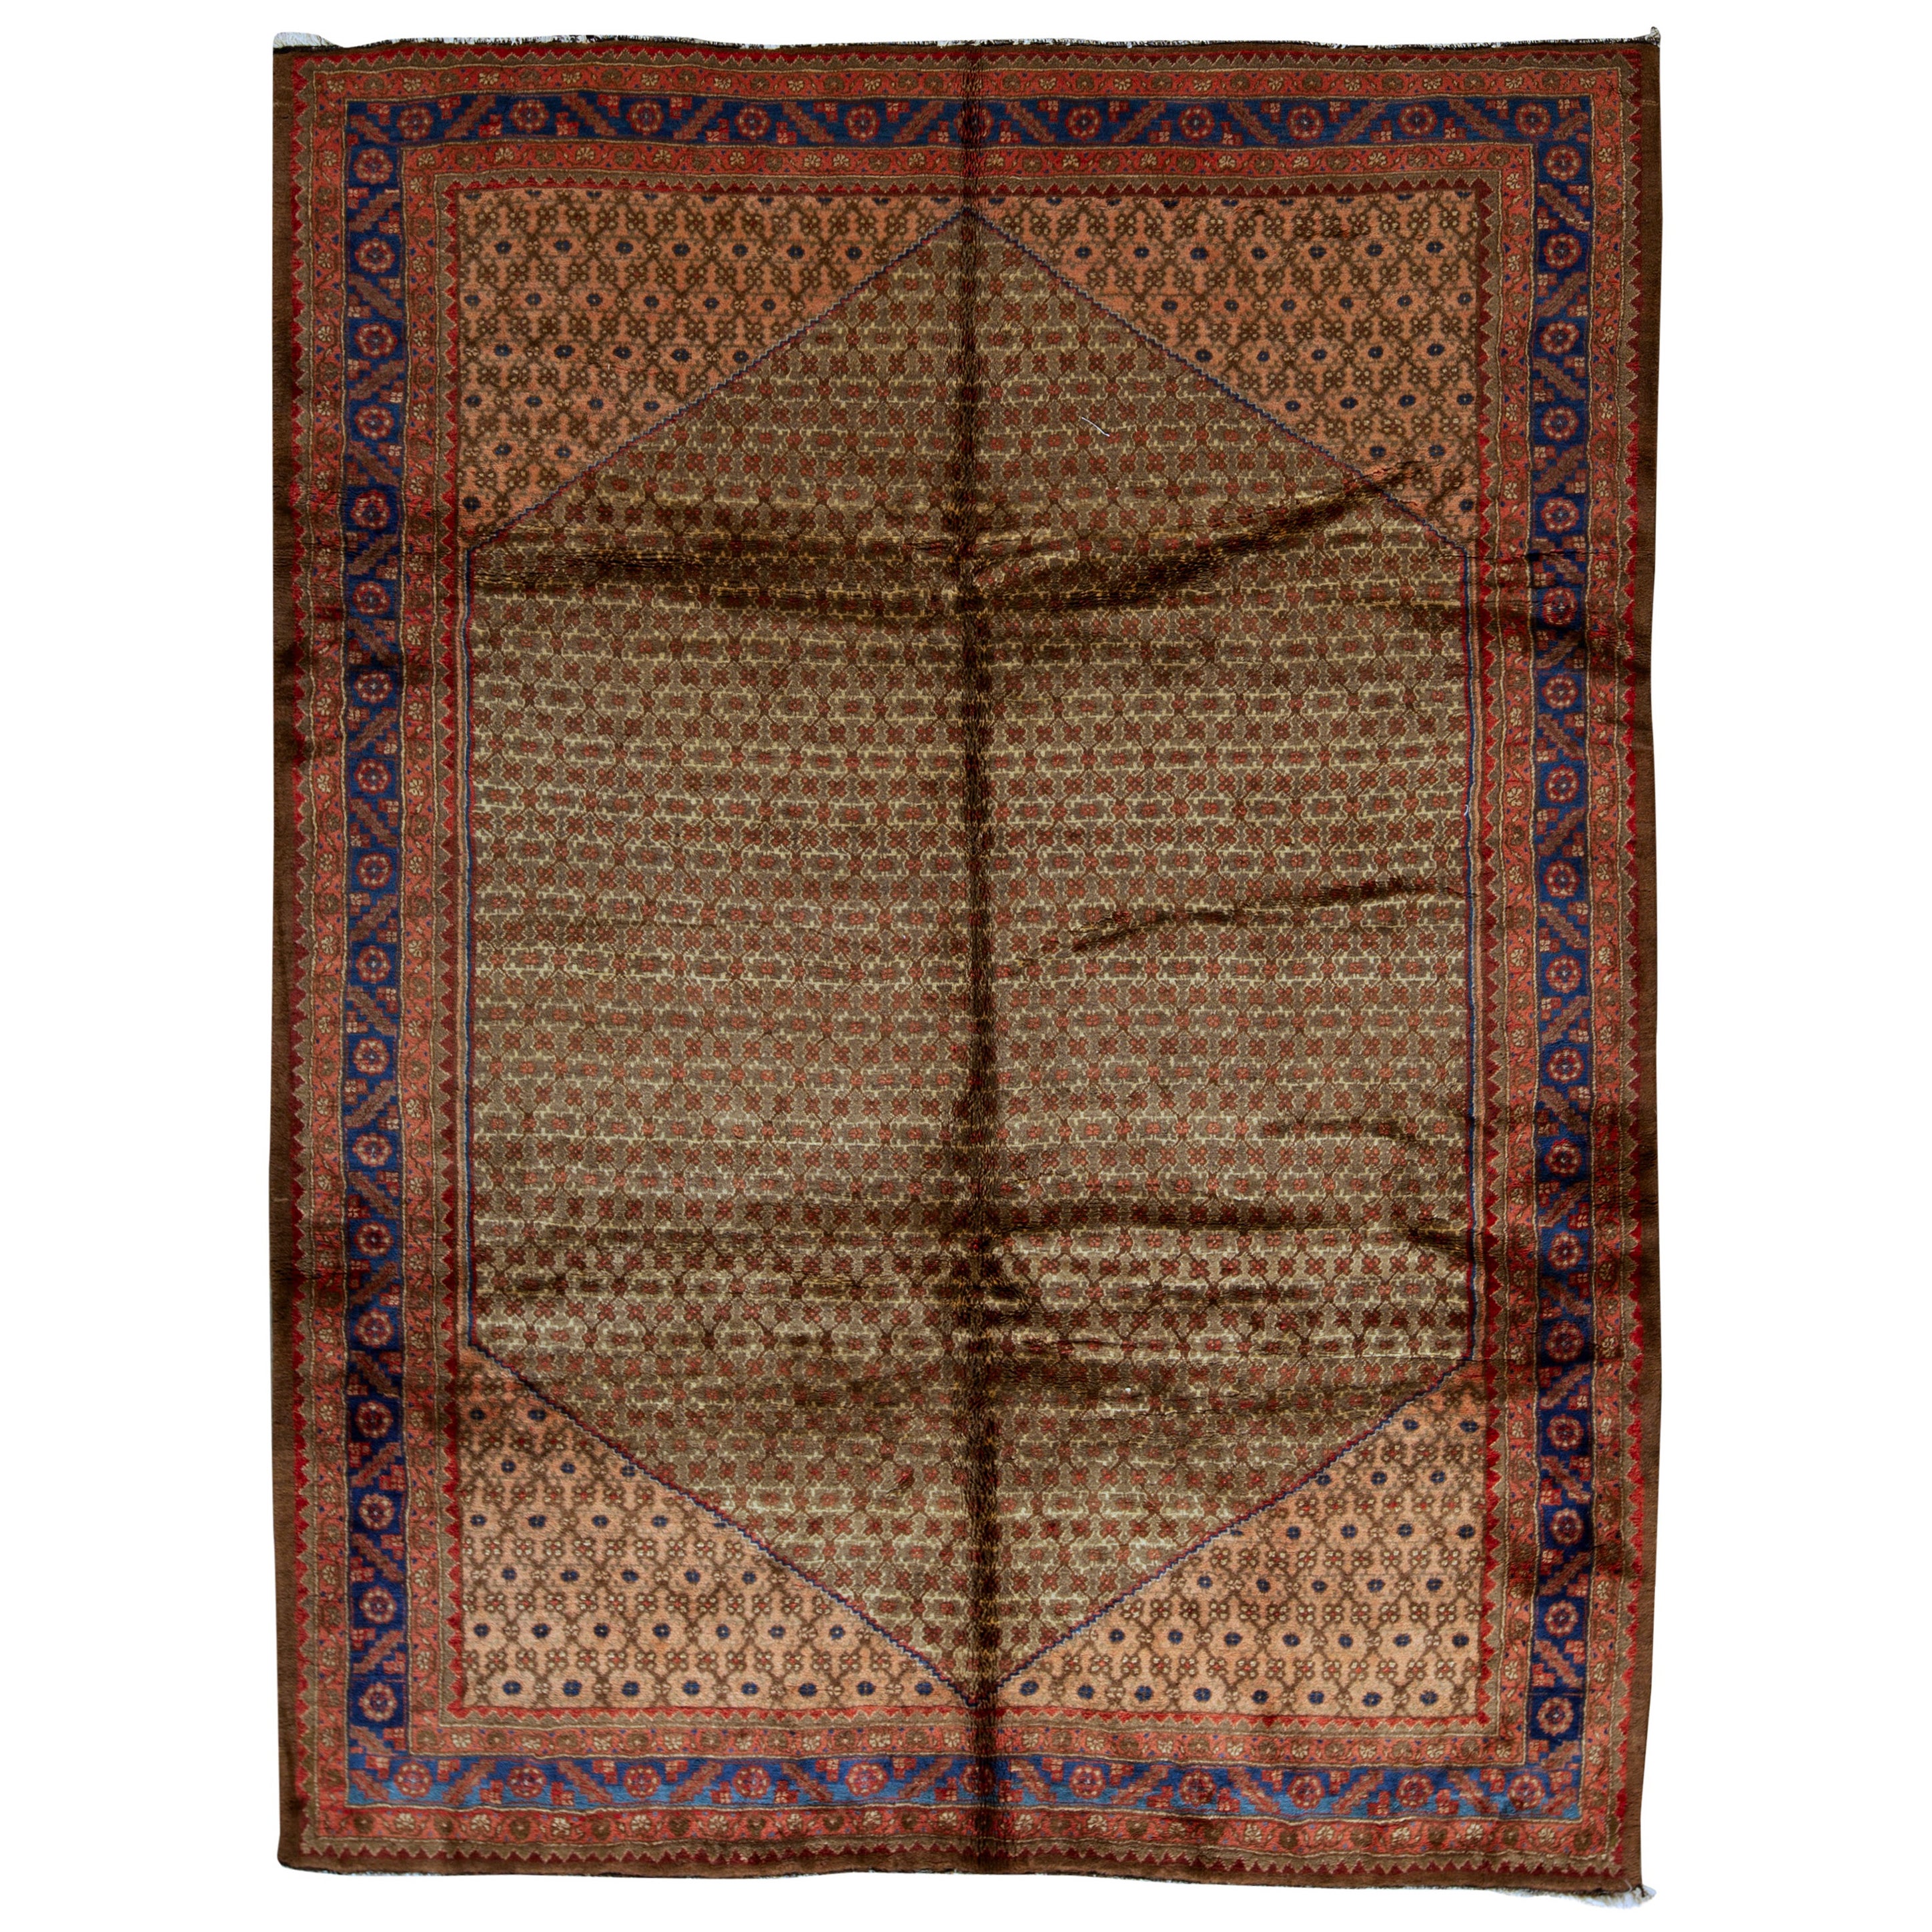   Antique Persian Fine Traditional Handwoven Luxury Wool Cream Rug